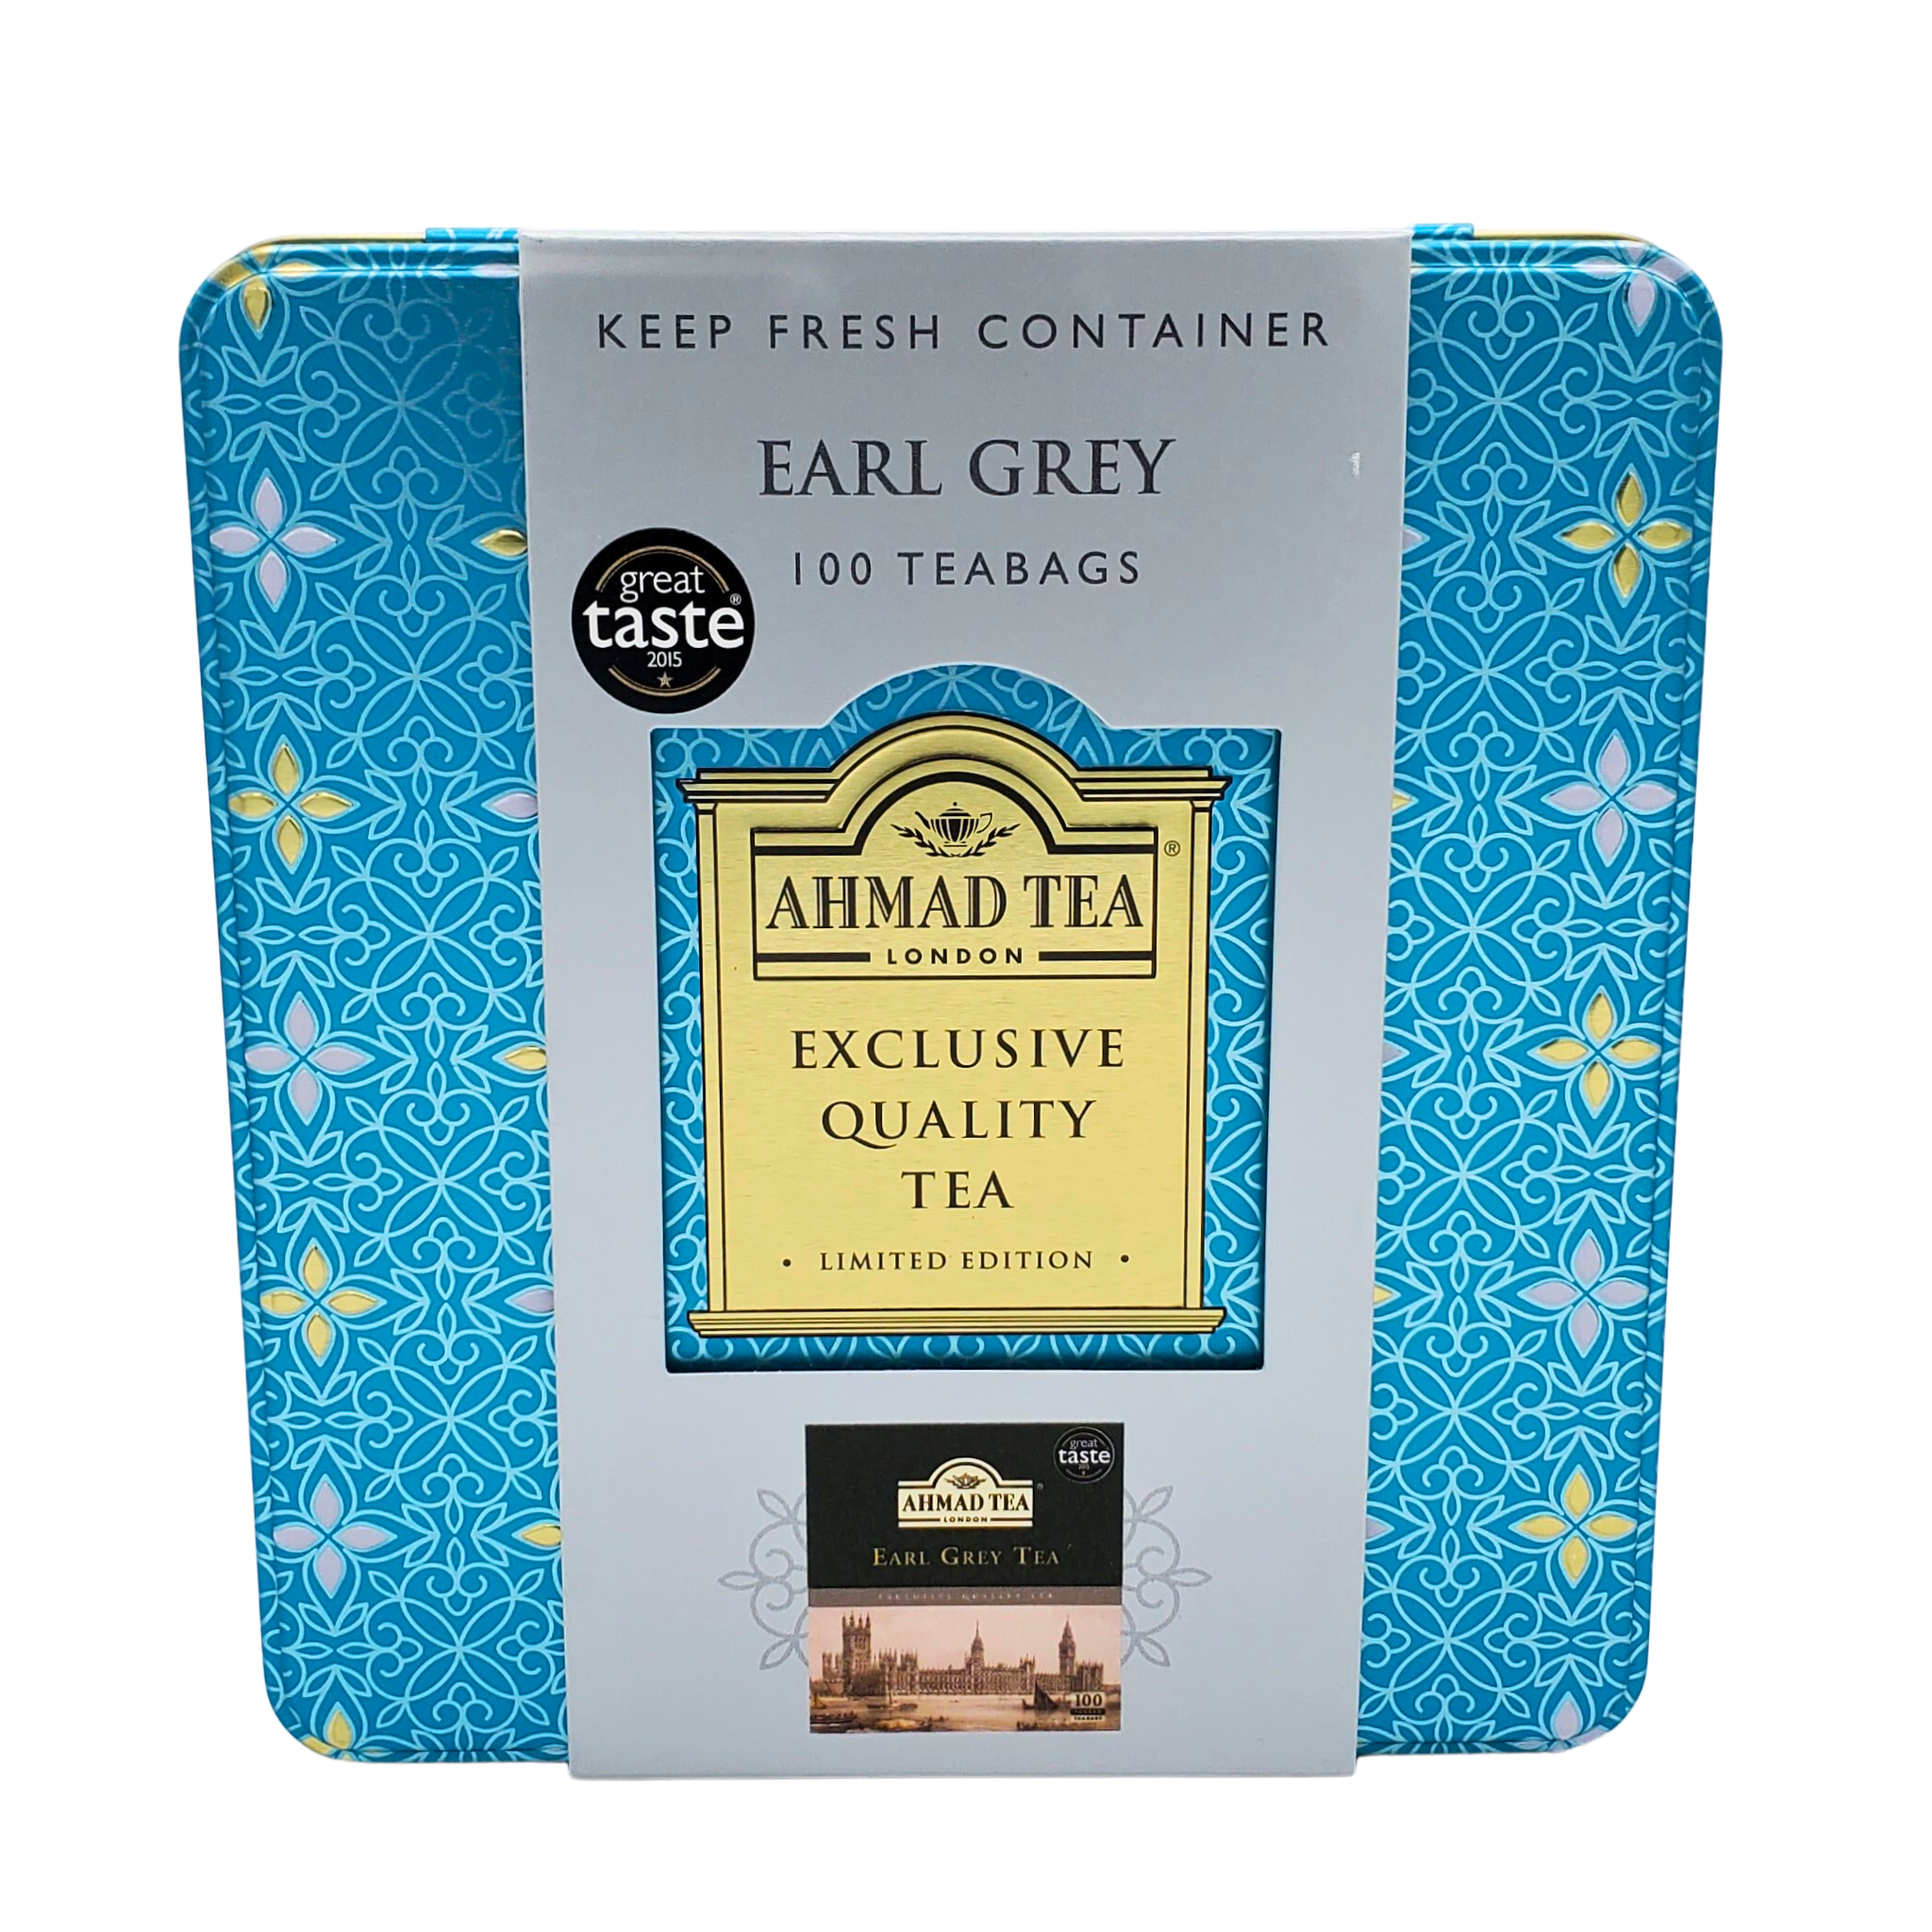 Ahmad Tea London Earl Grey Tea 100 Tea Bags Exclusive Quality Tea Limited Edition